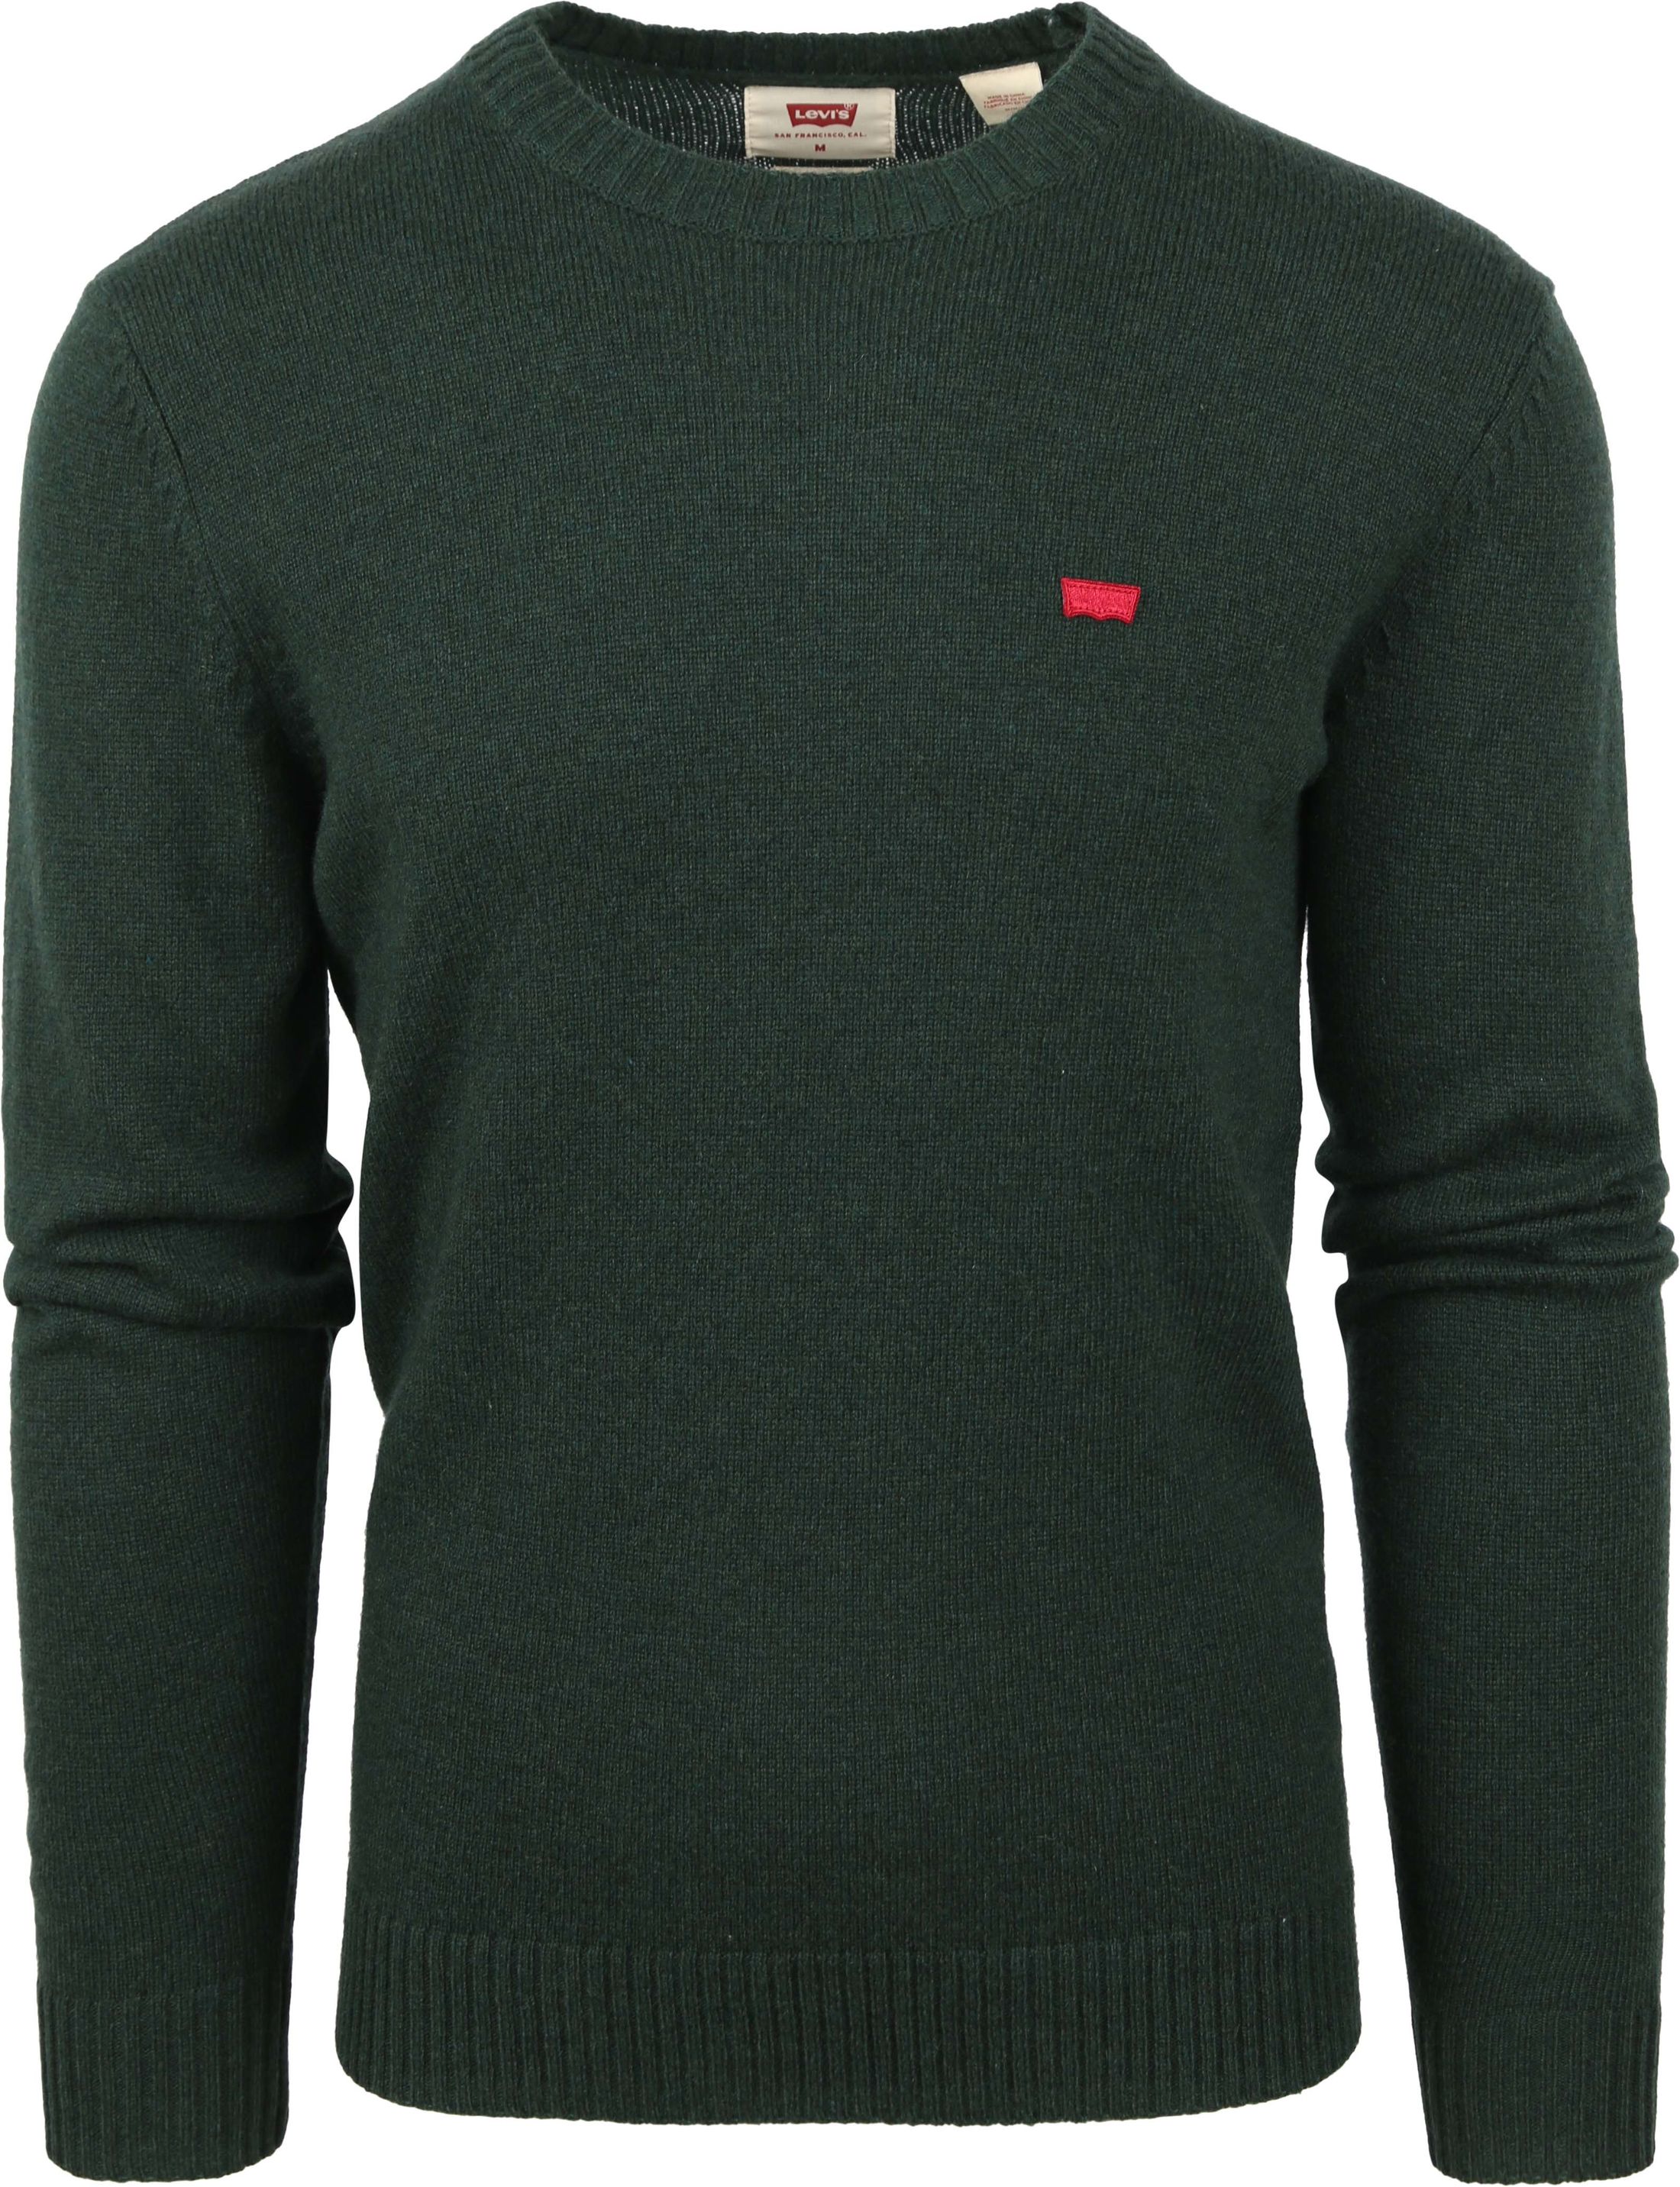 Levi's Original Sweater Wol Donkergroen Green Dark Green size XXL